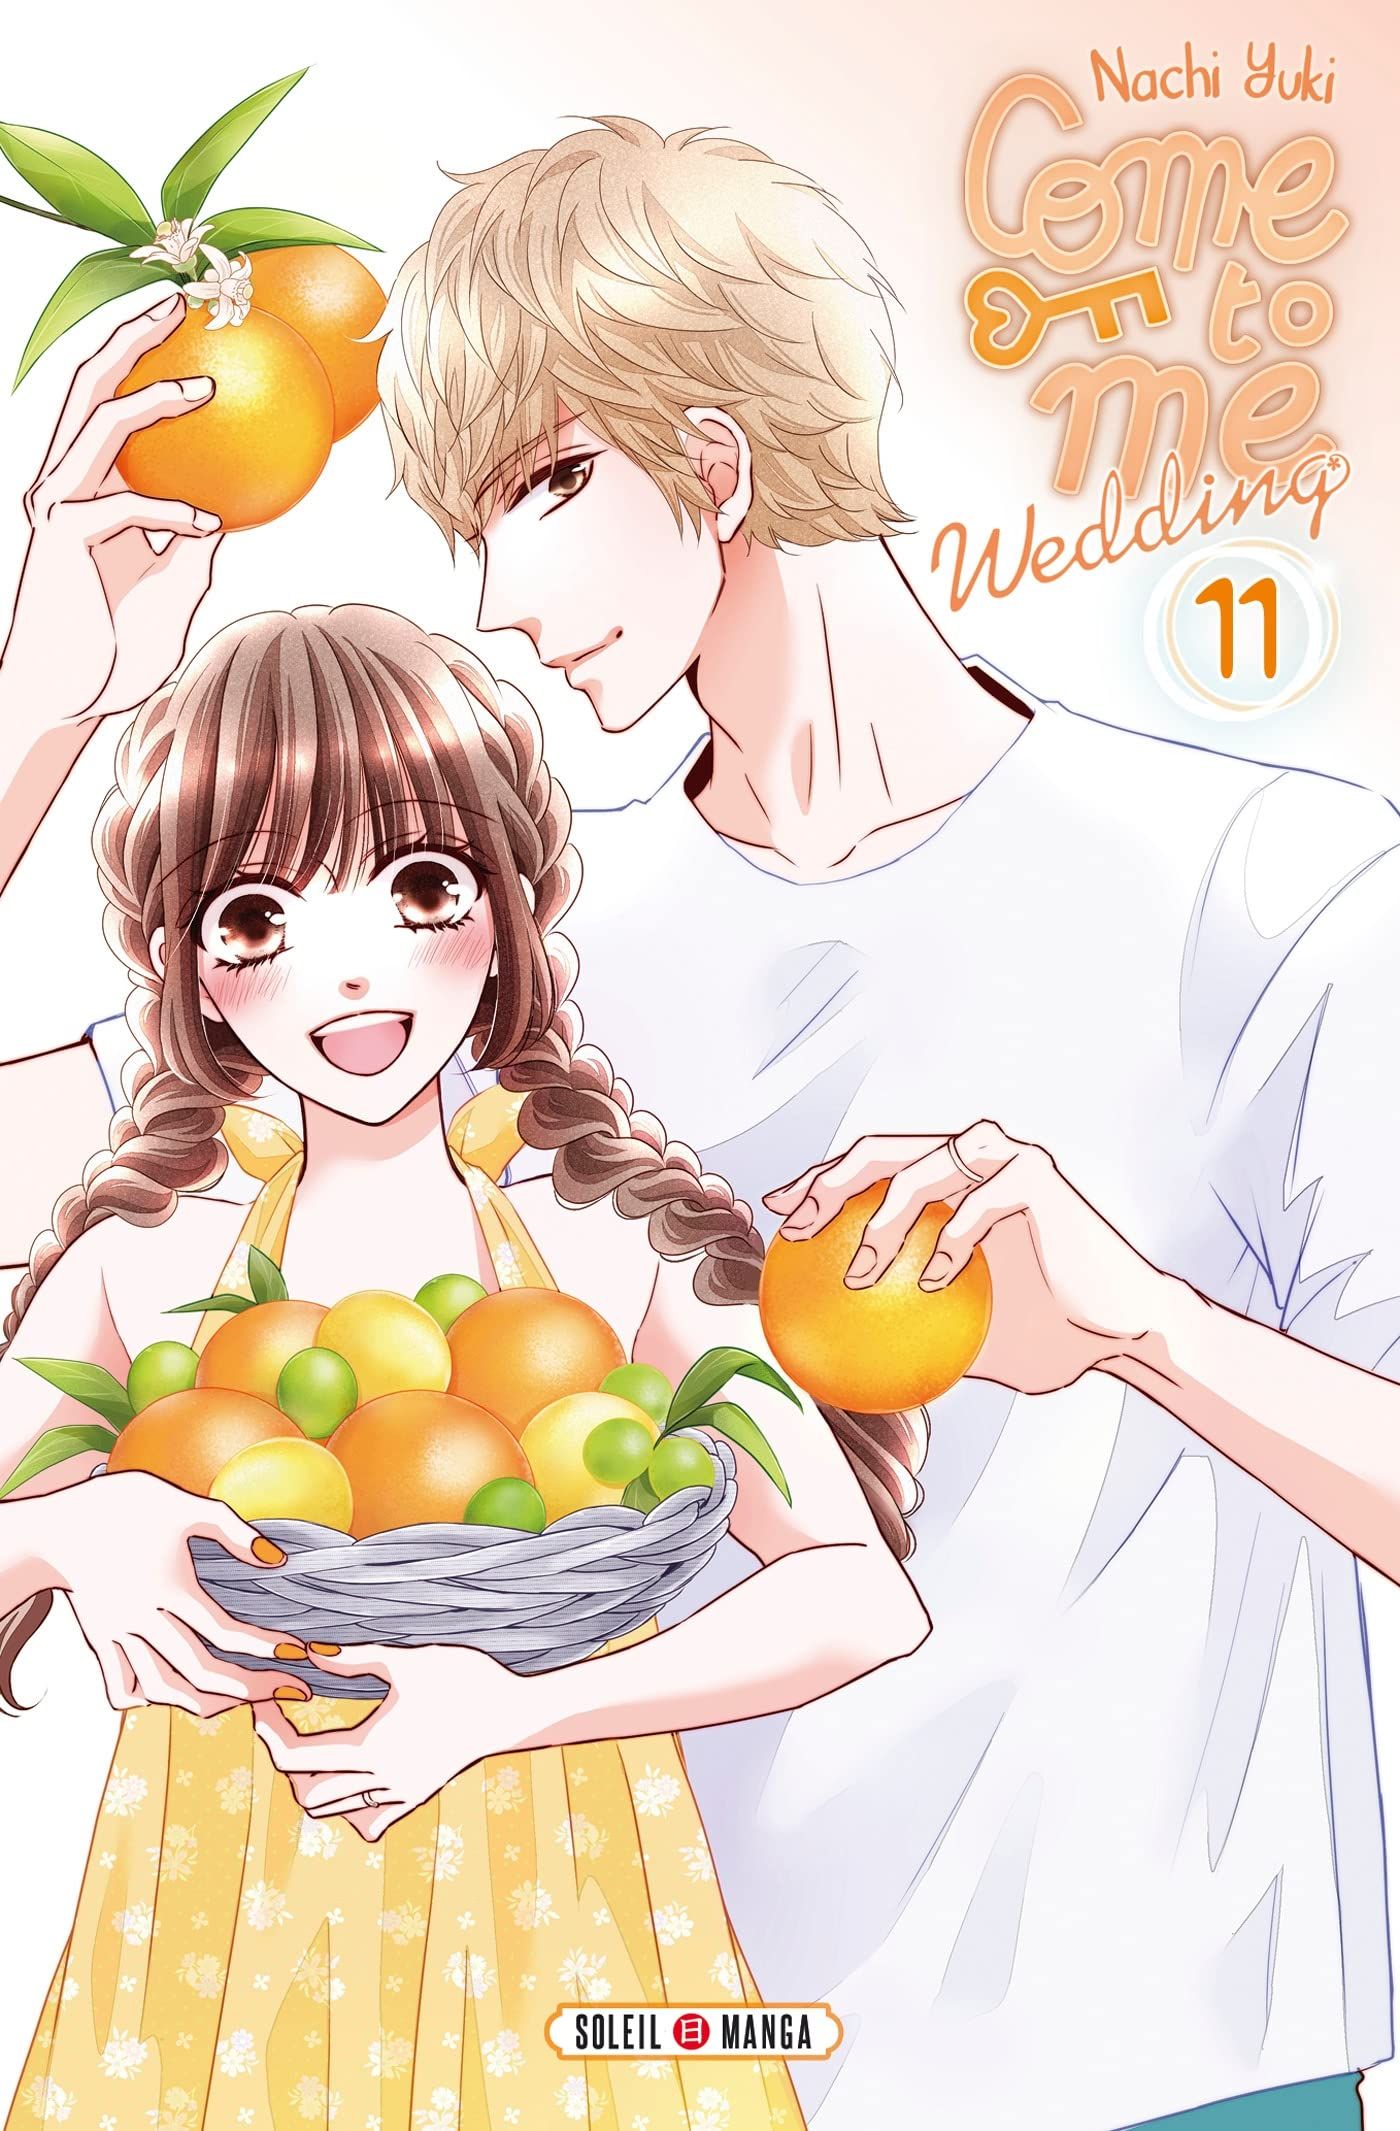 Manga - Manhwa - Come to me Wedding Vol.11